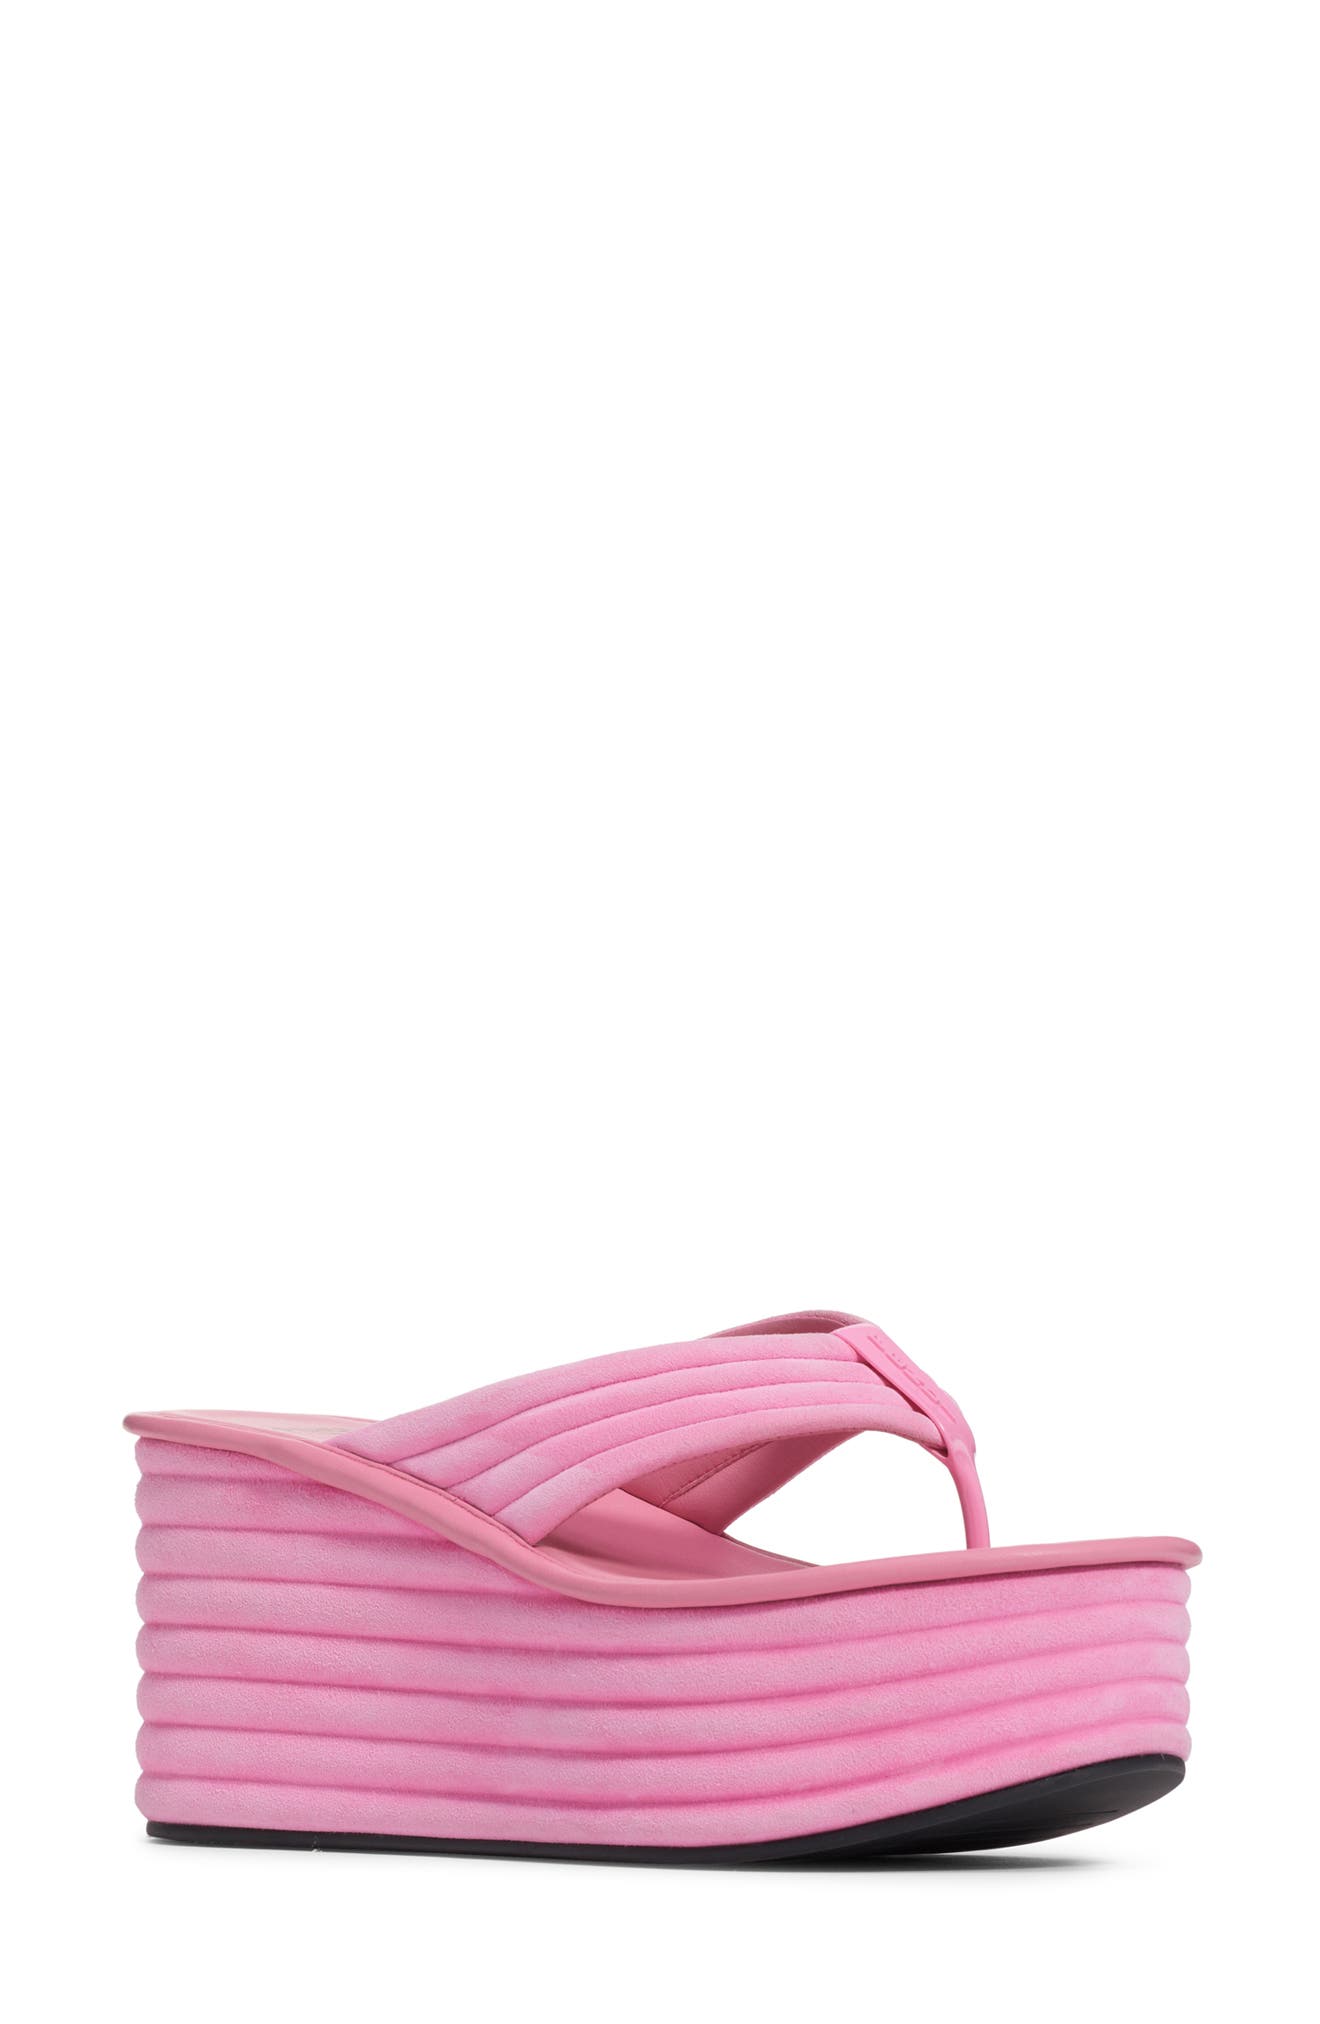 pink flip flop